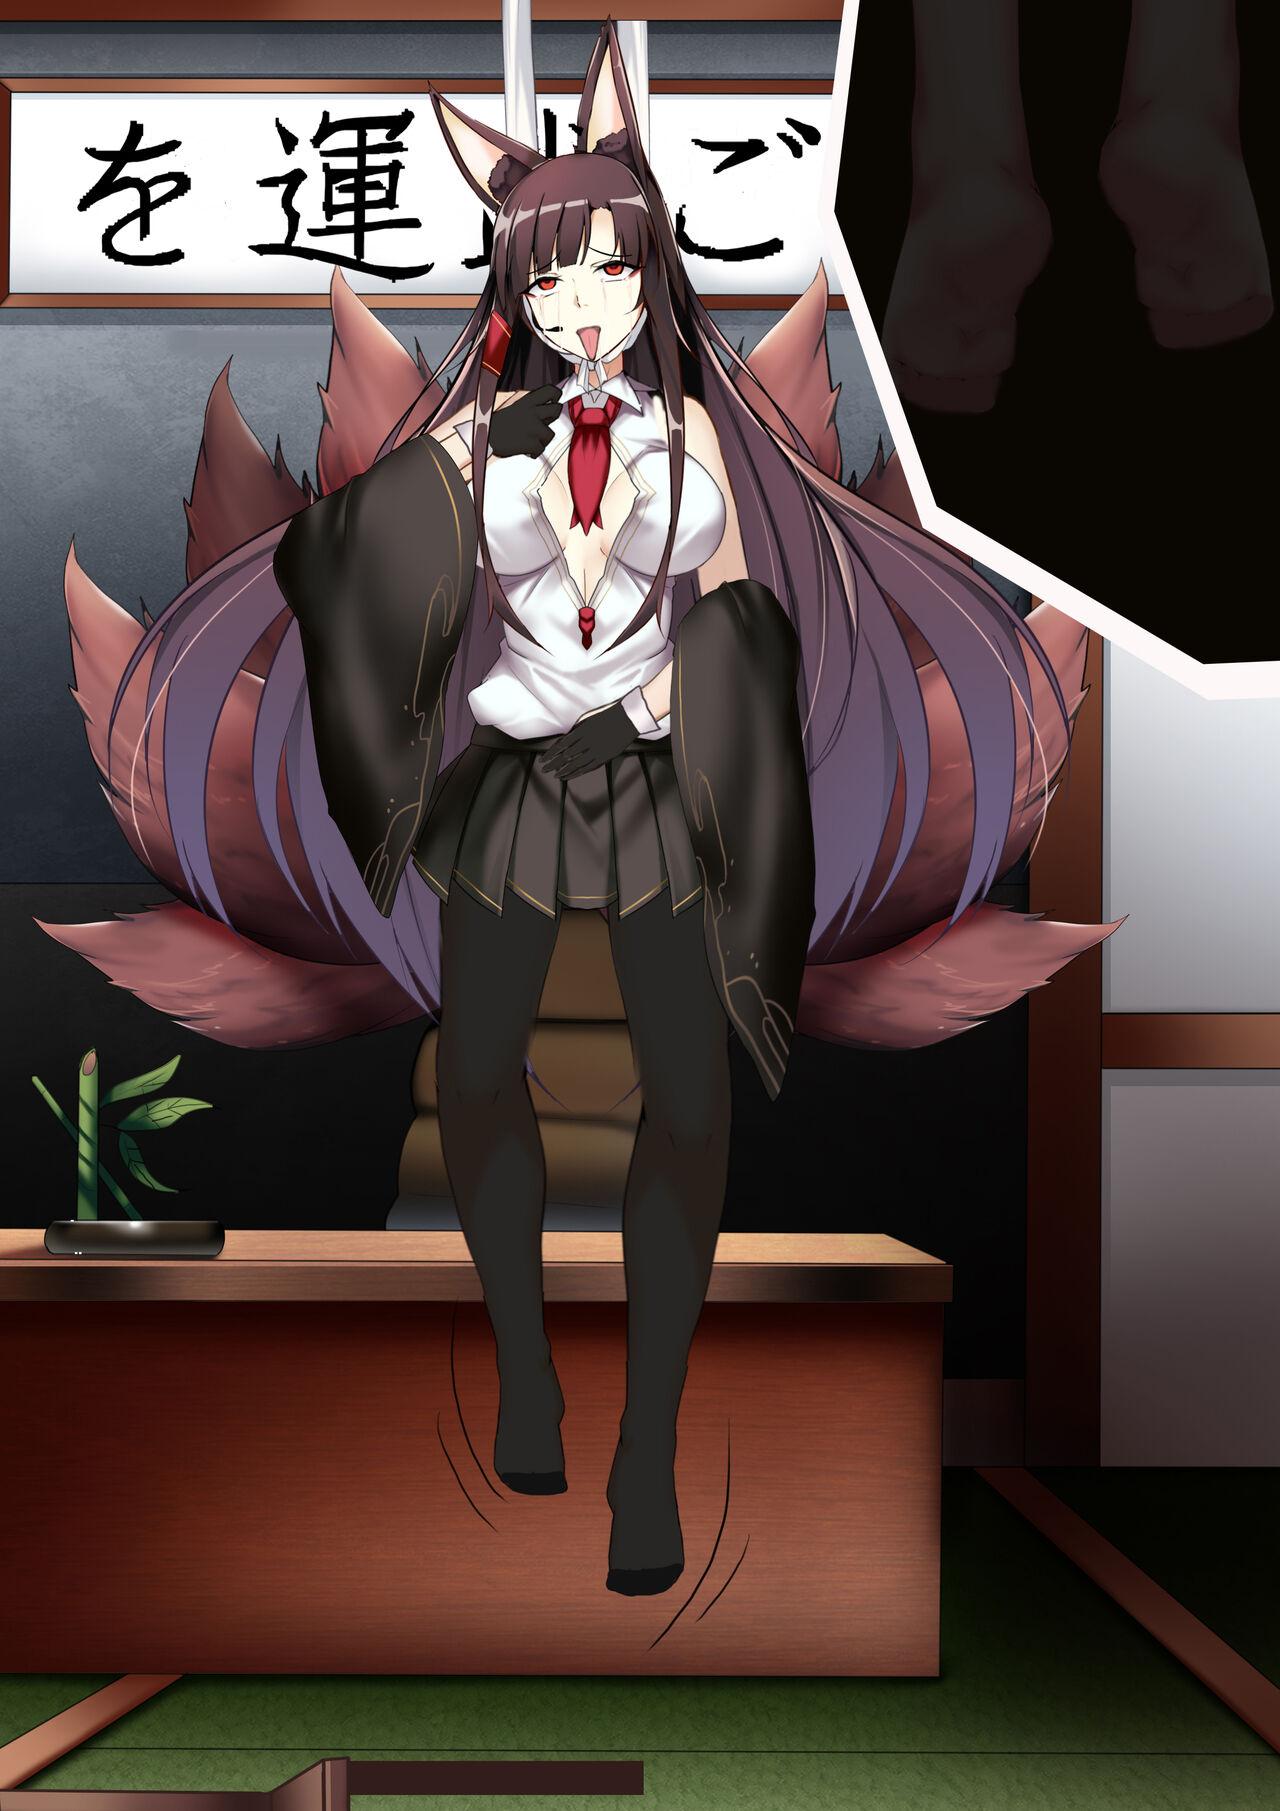 Akagi hanged herself in her office 41